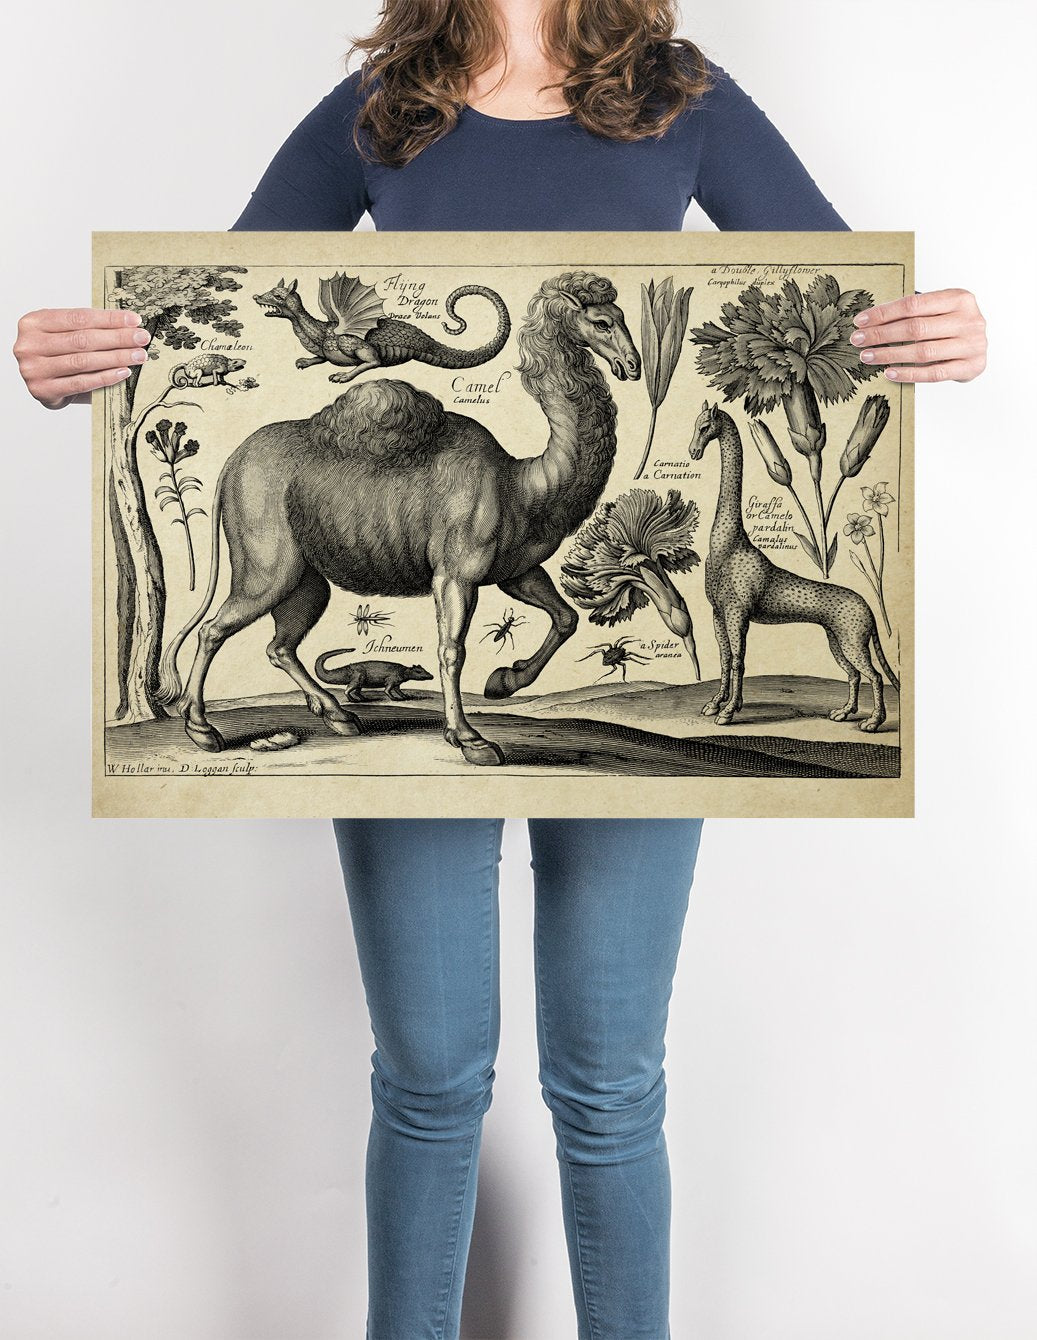 Camera Kupferstich antique poster - Vintage animal lithograph for your decor idea!